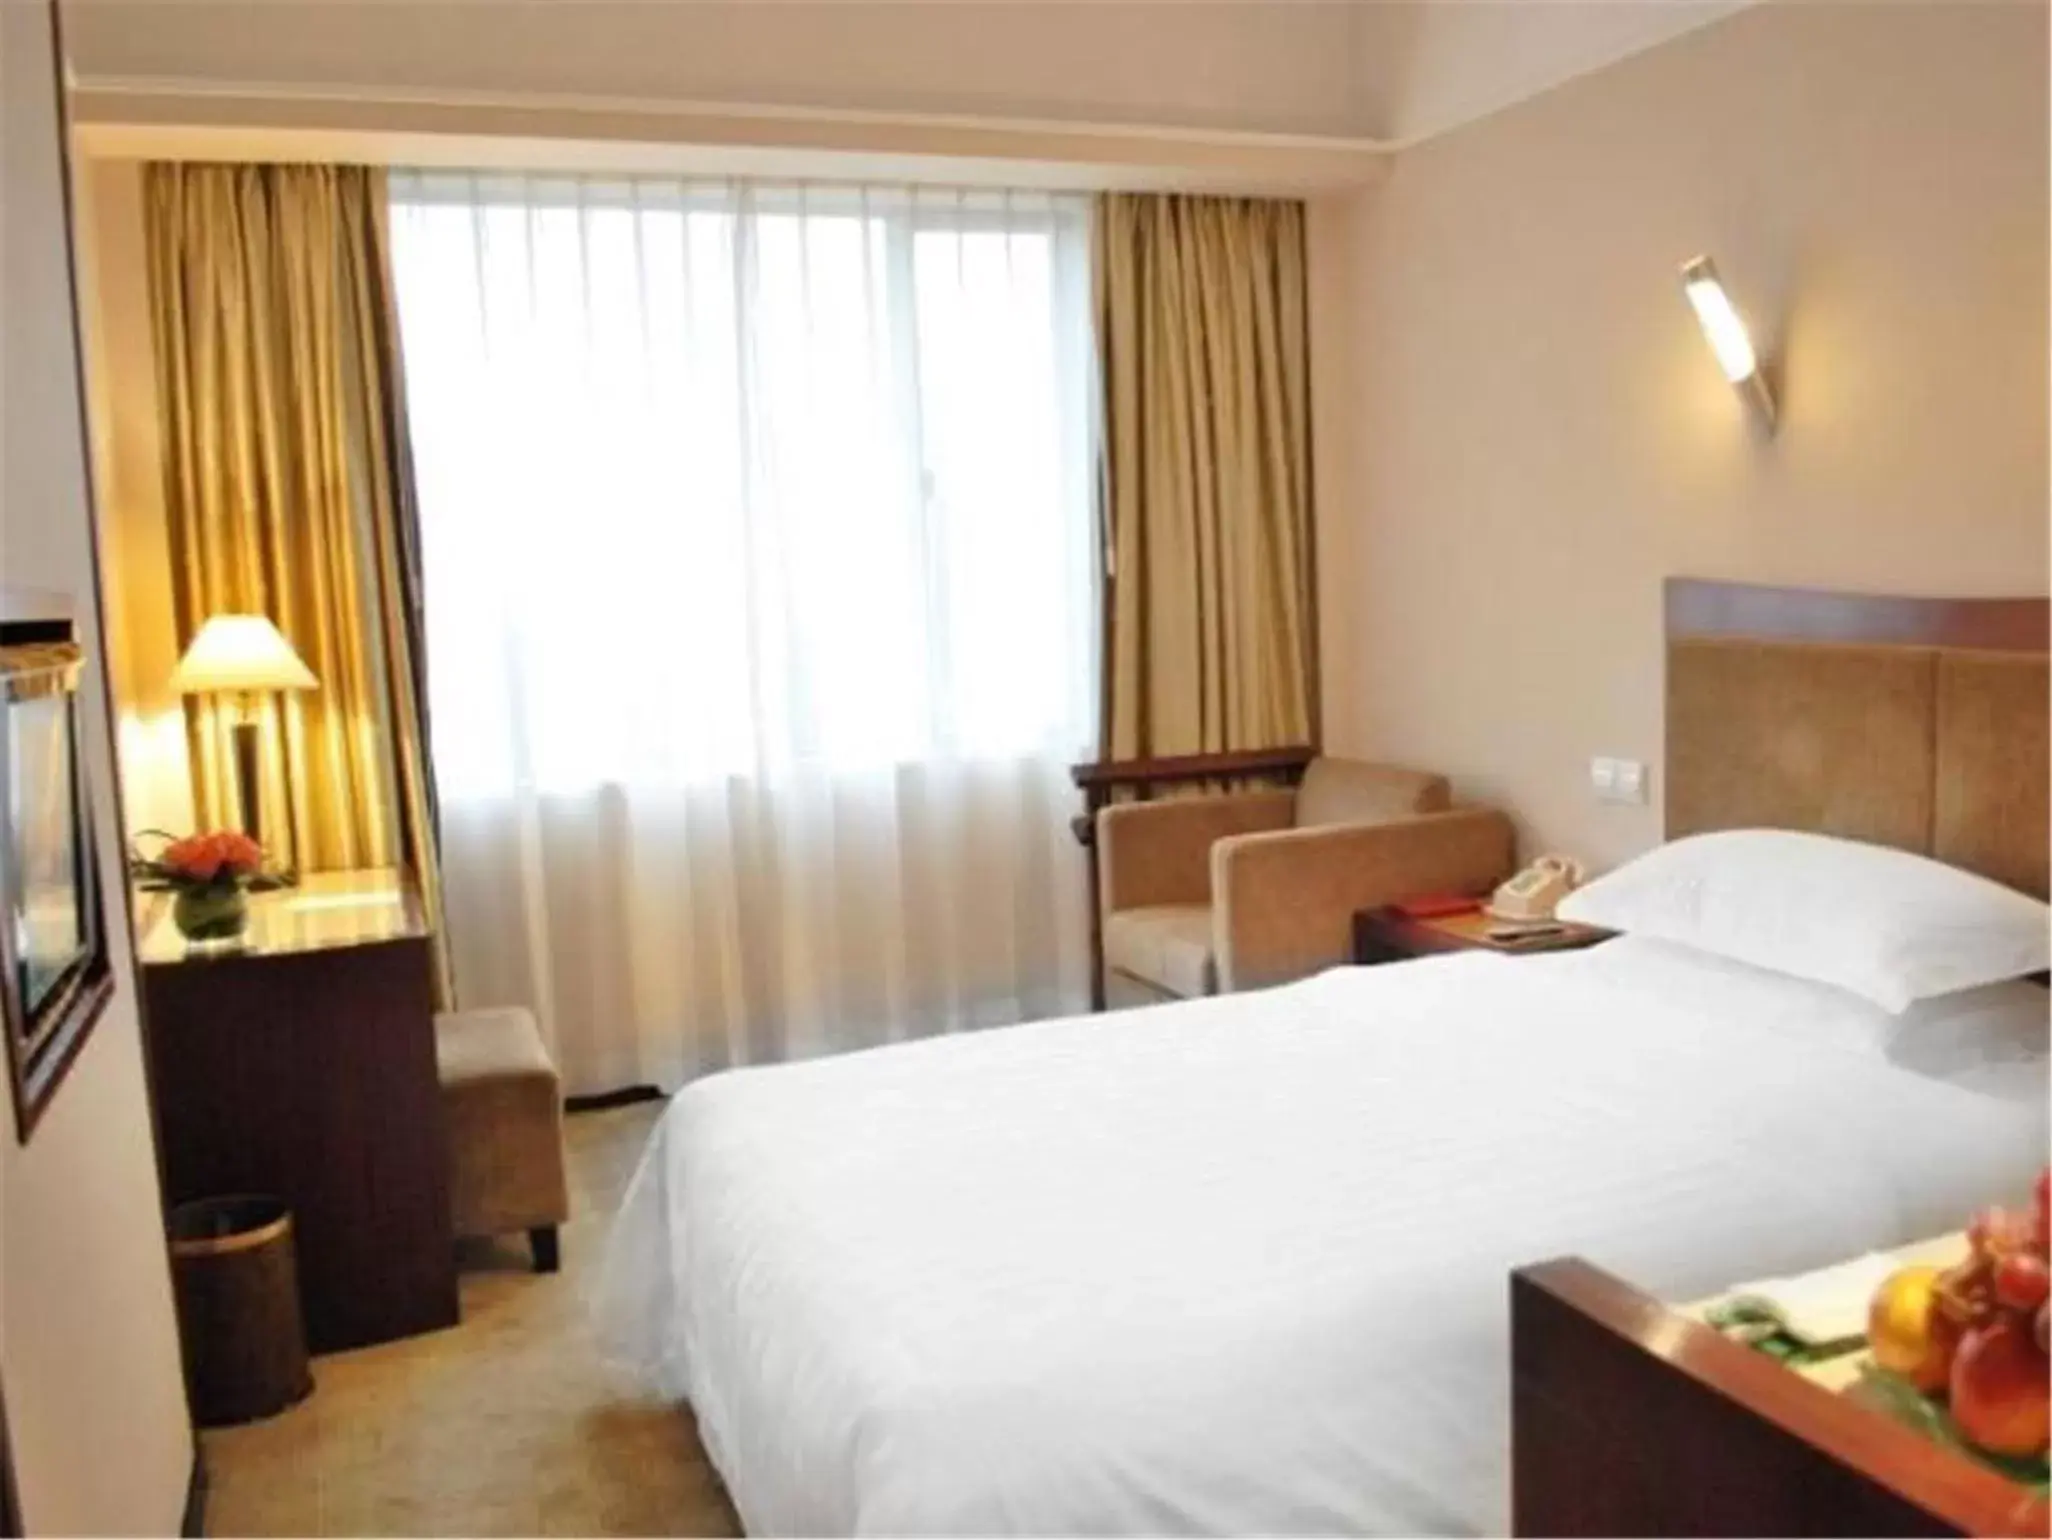 Bedroom, Room Photo in Zhongshan International Hotel